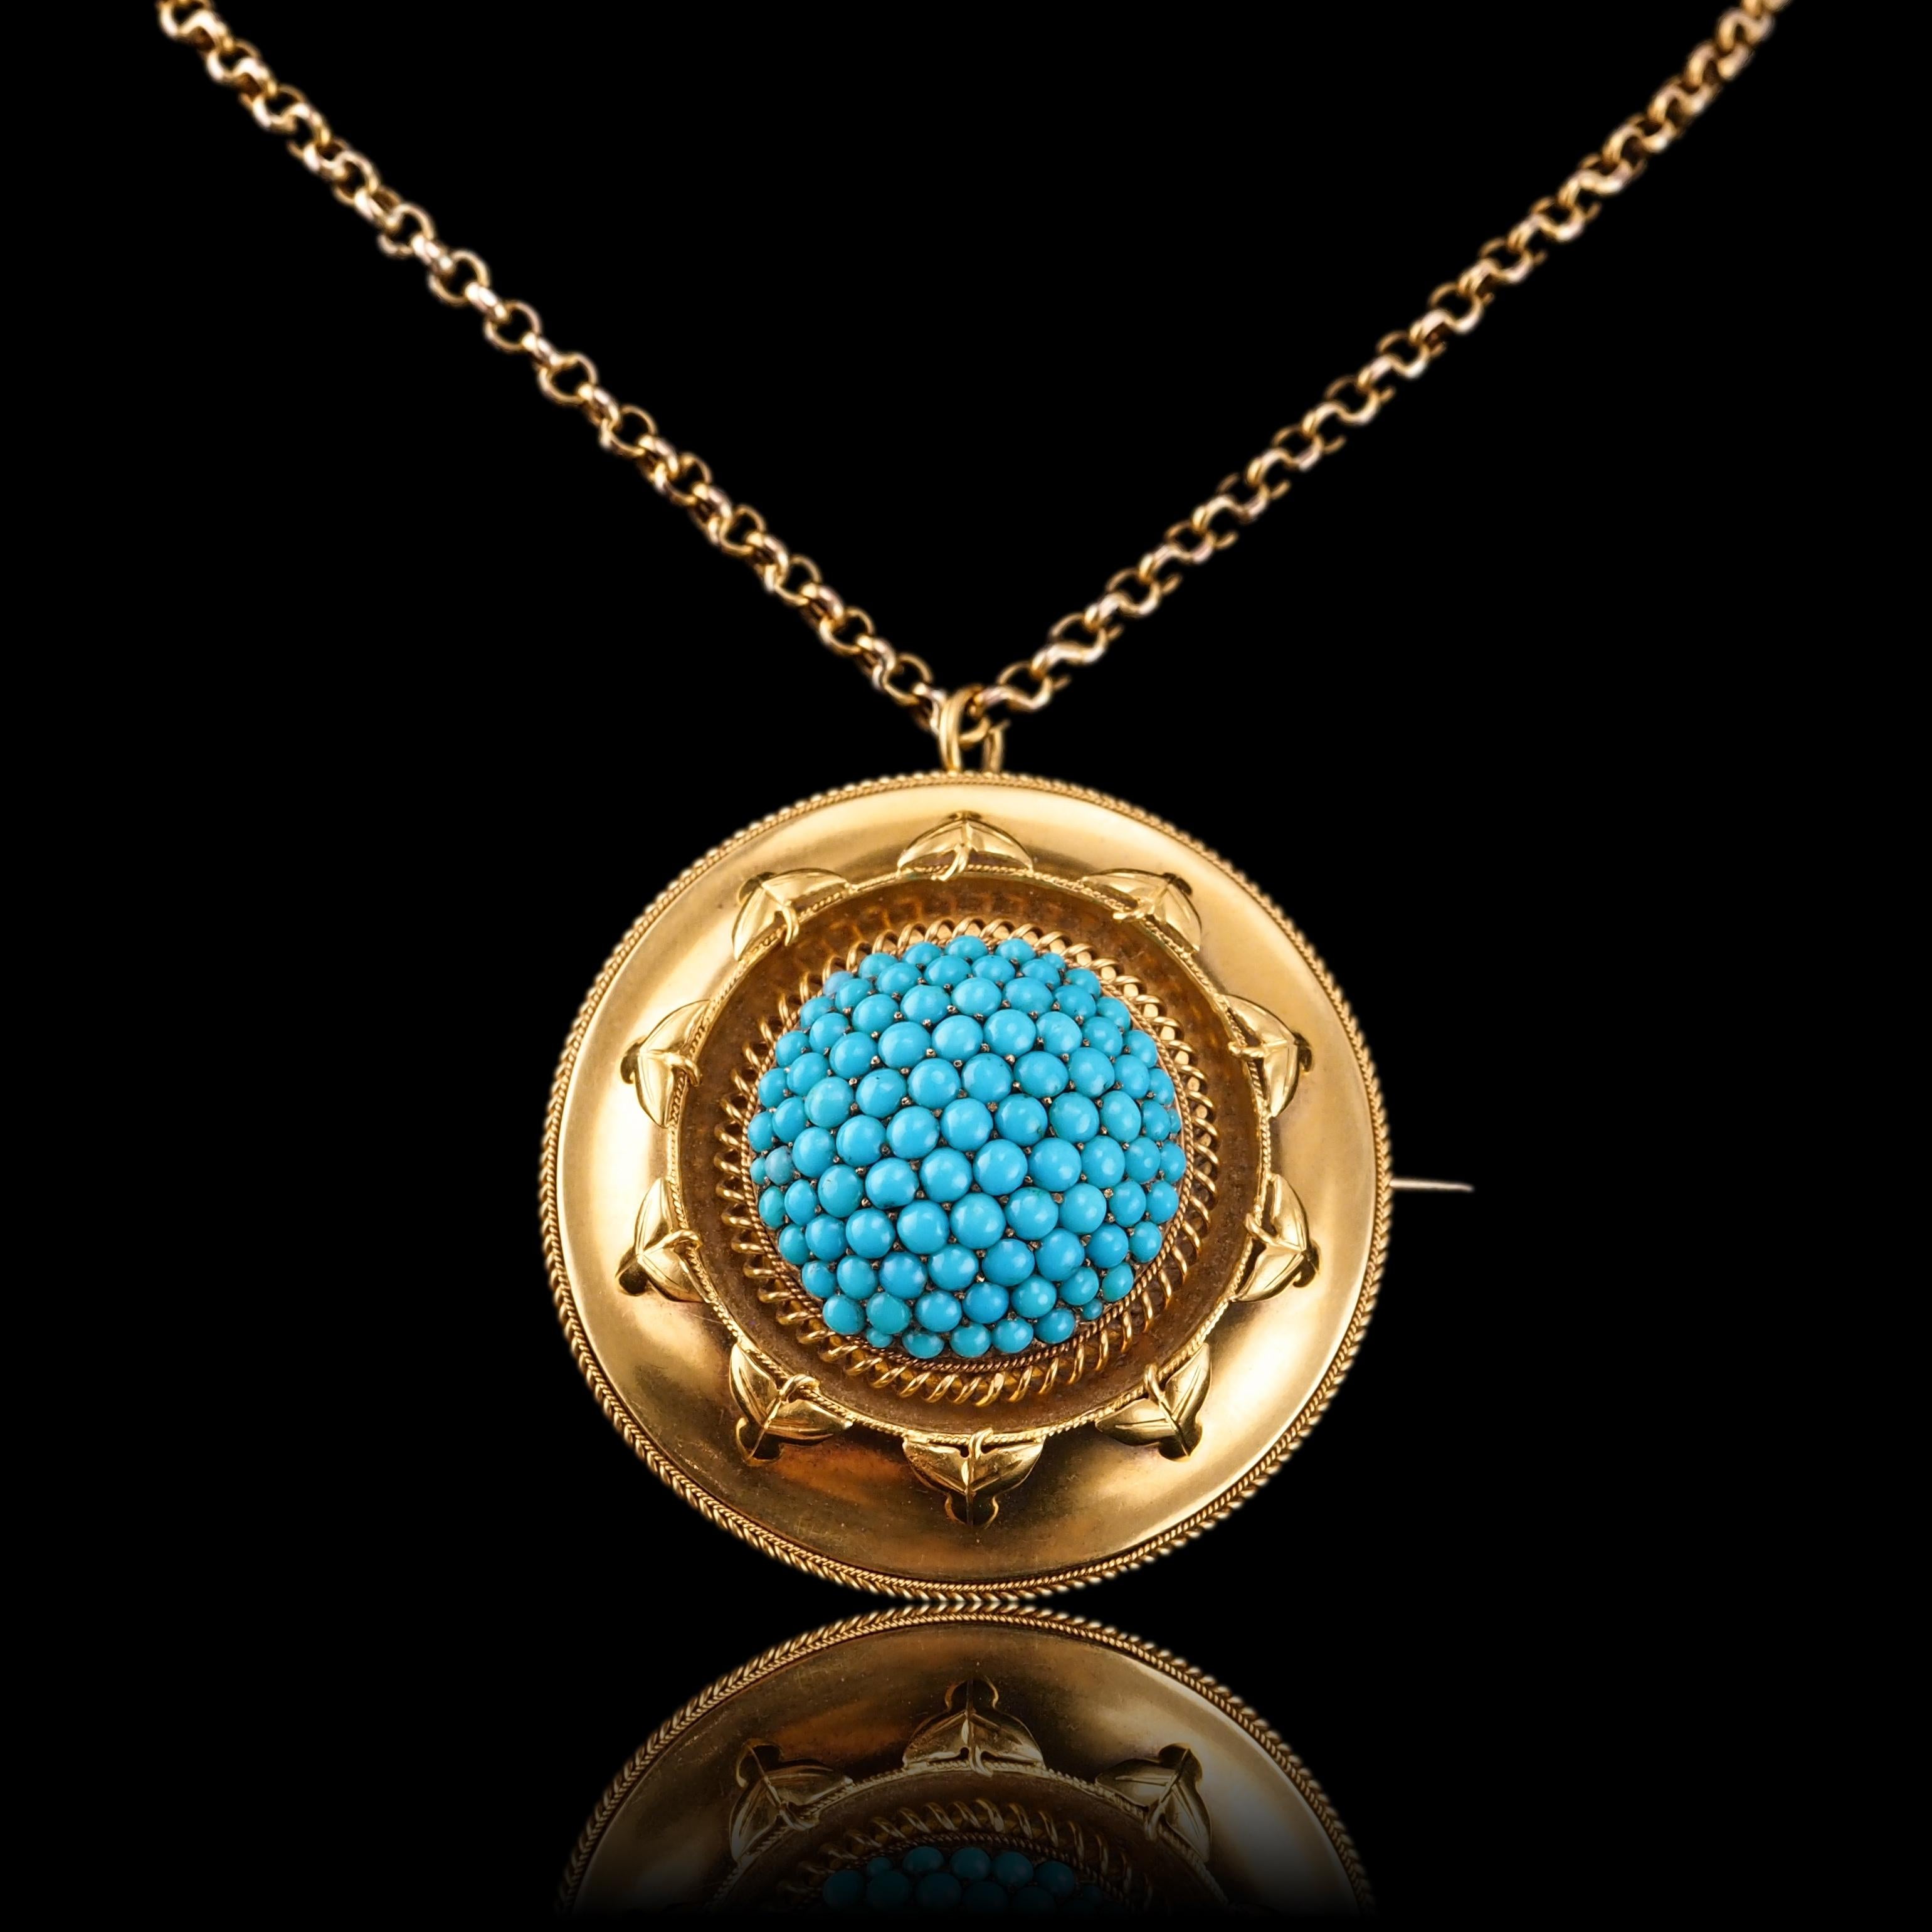 Women's or Men's Antique Victorian Turquoise Pendant Necklace Brooch 18K Gold Etruscan c.1880 For Sale